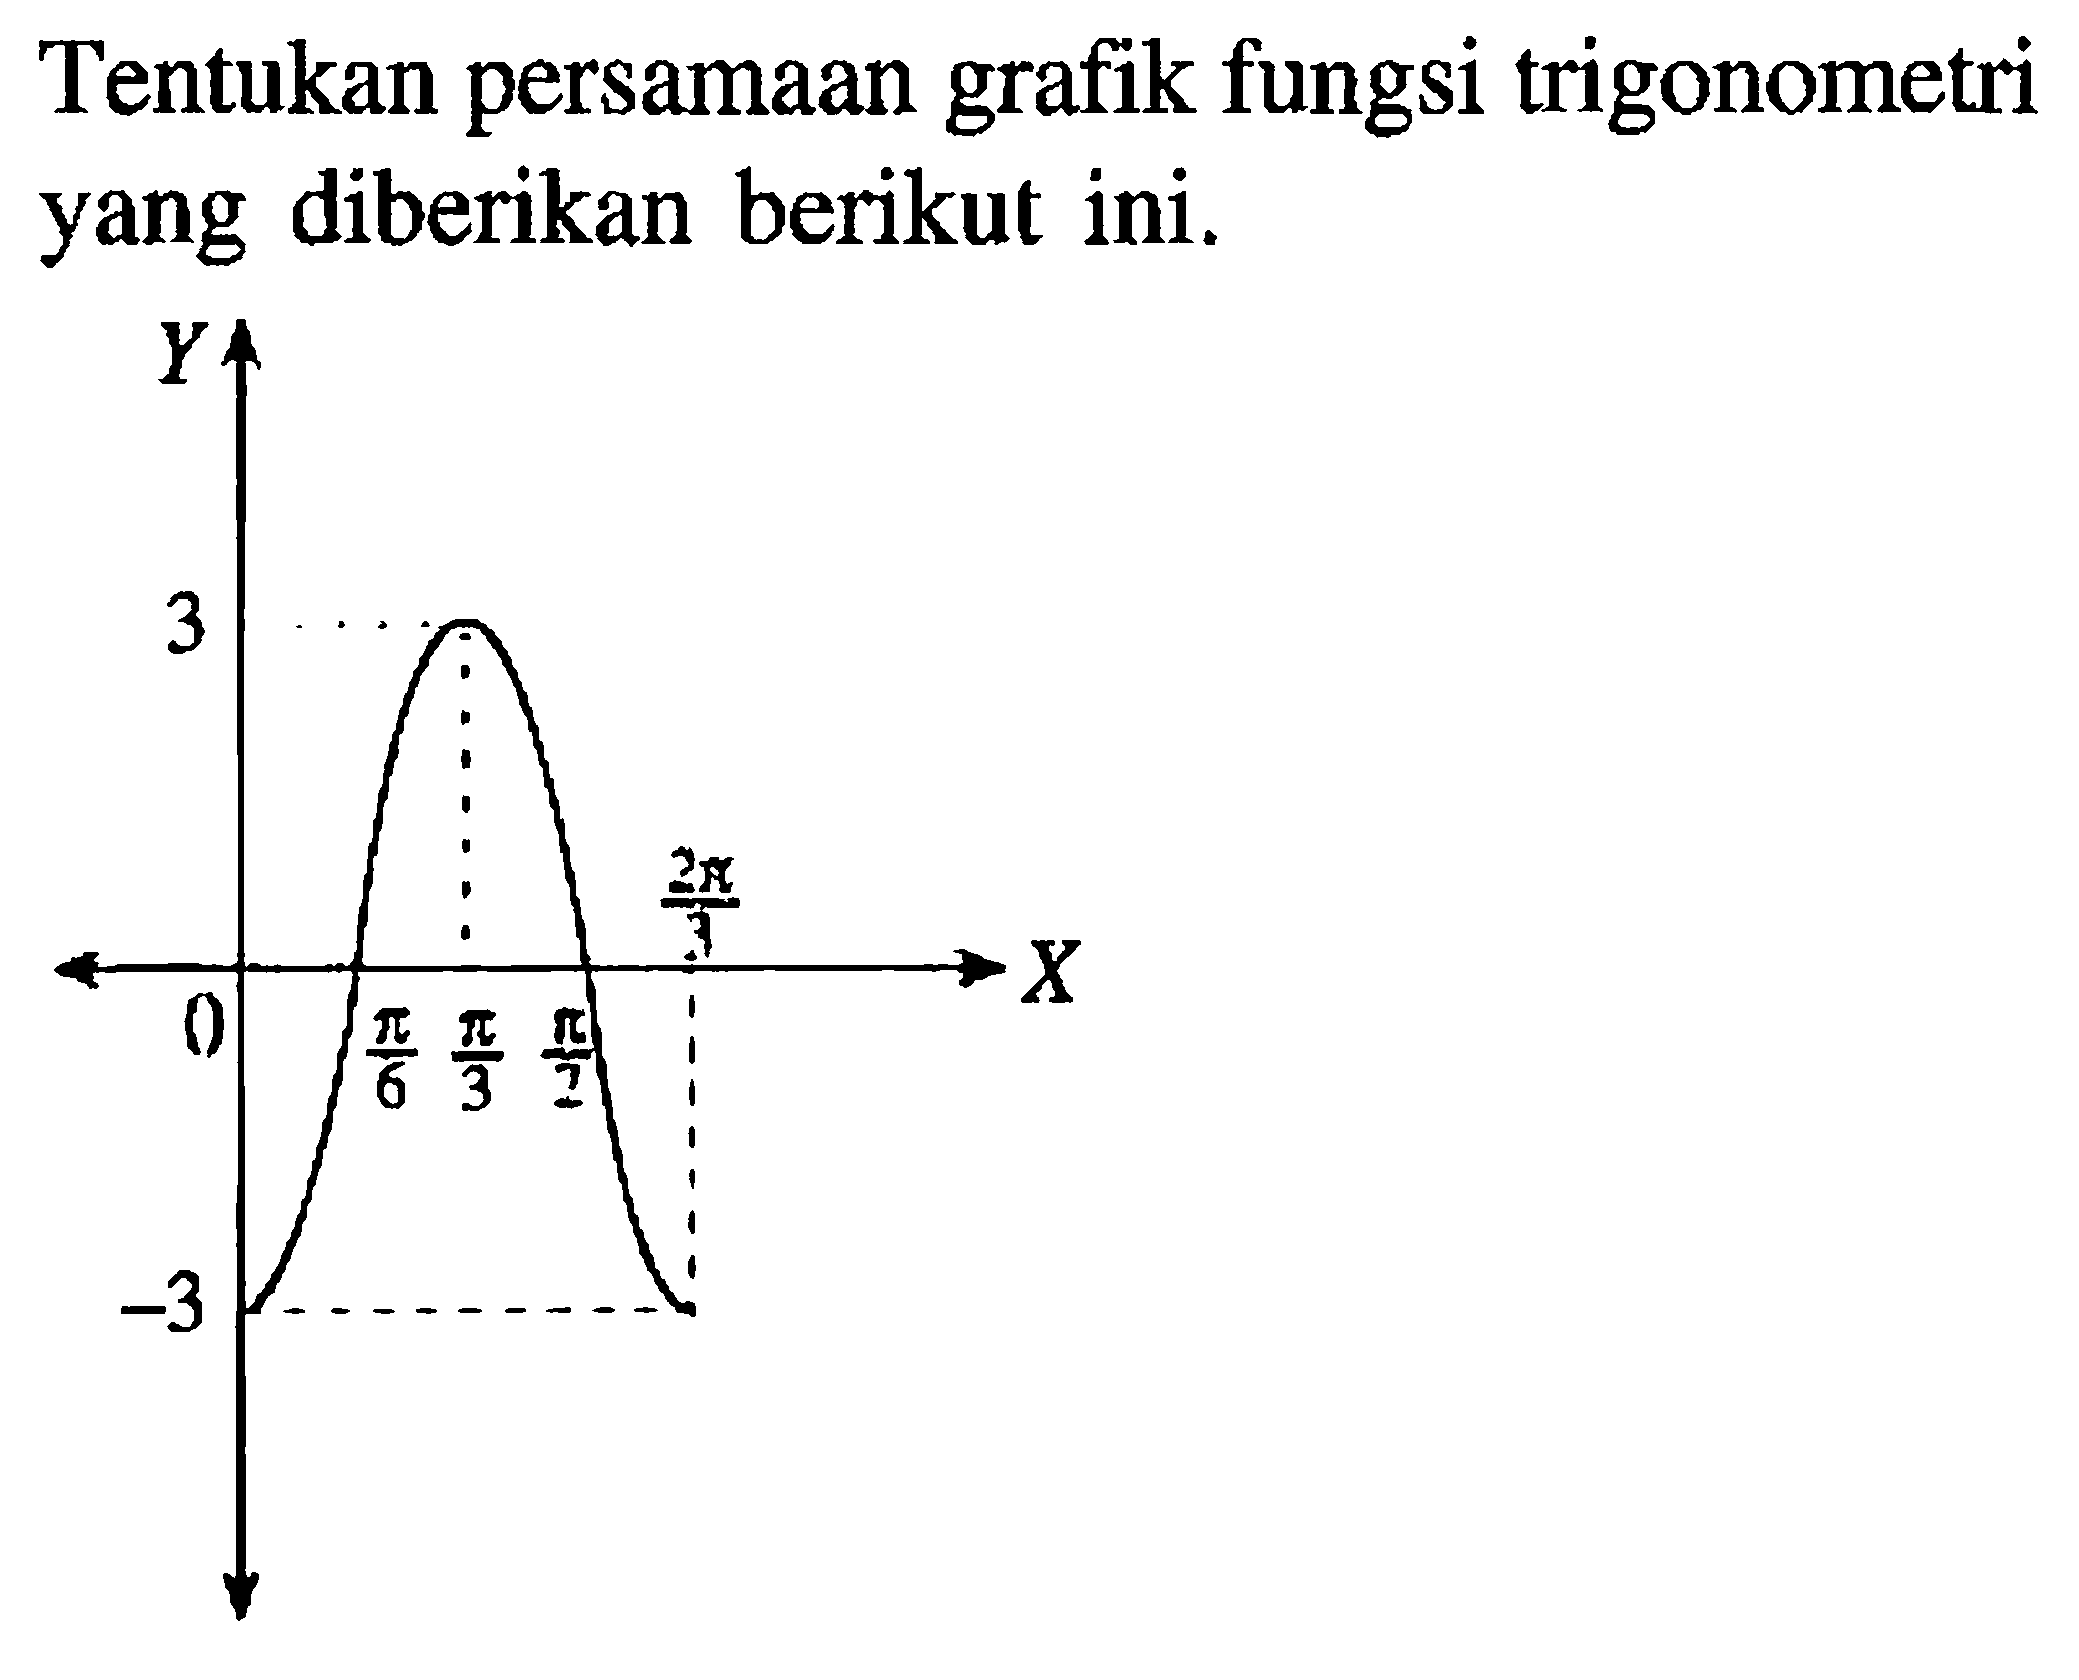 Tentukan persamaan grafik fungsi trigonometri yang diberikan berikut ini.